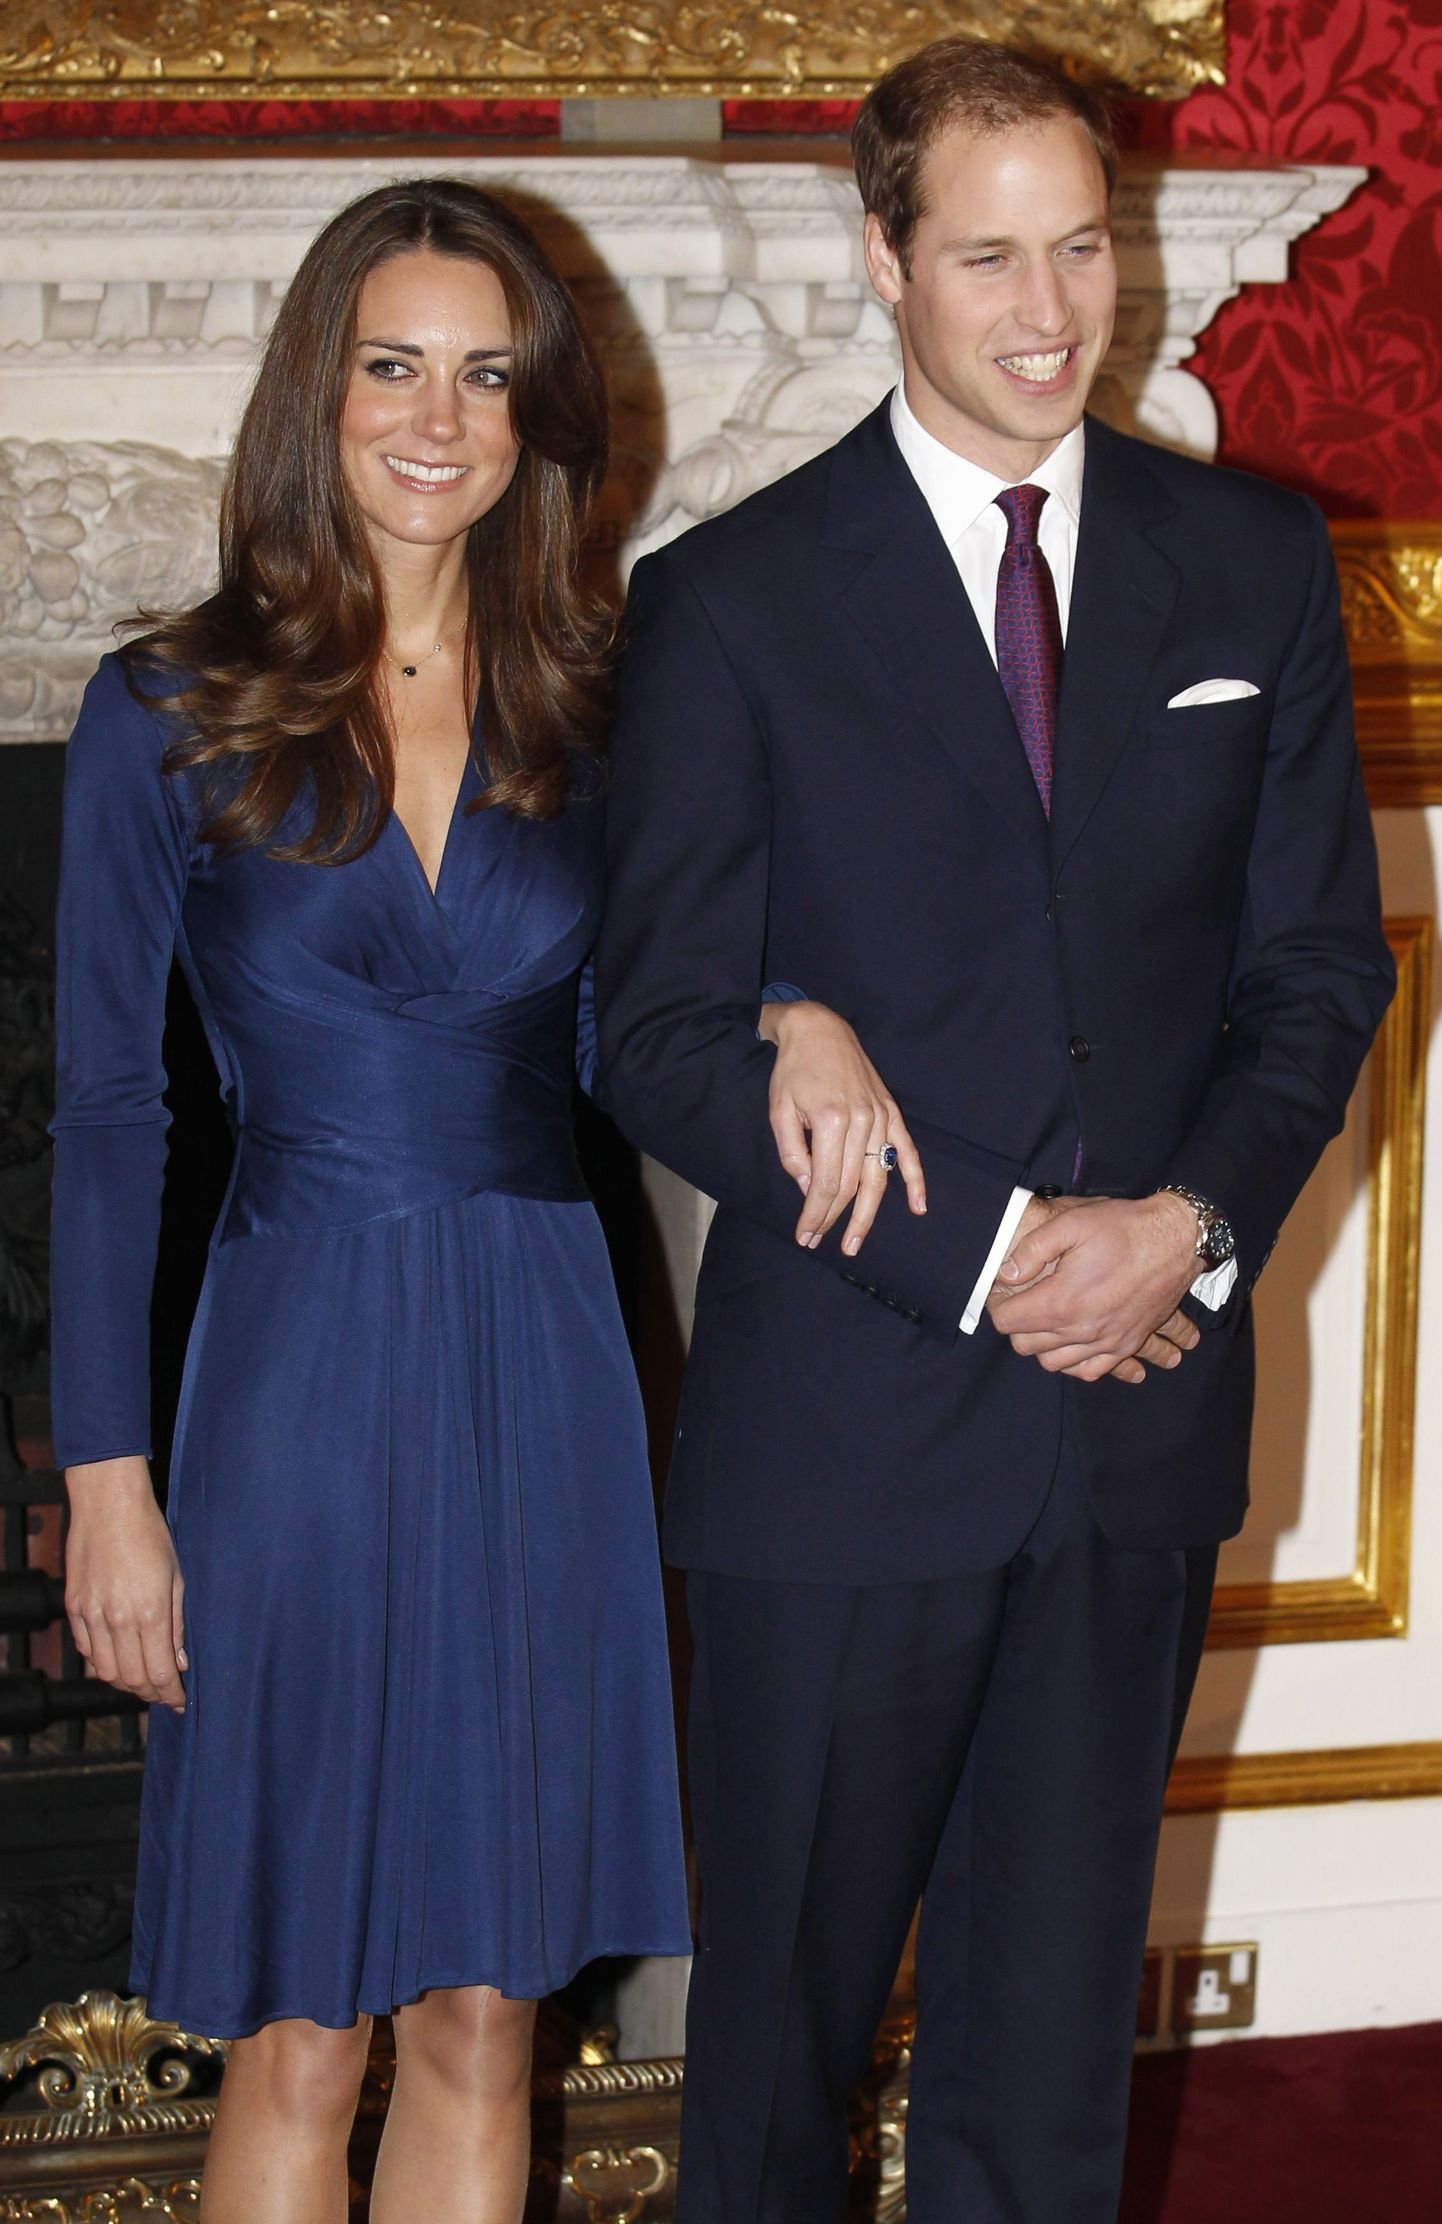 Prints William ja ta kihlatu Kate Middleton